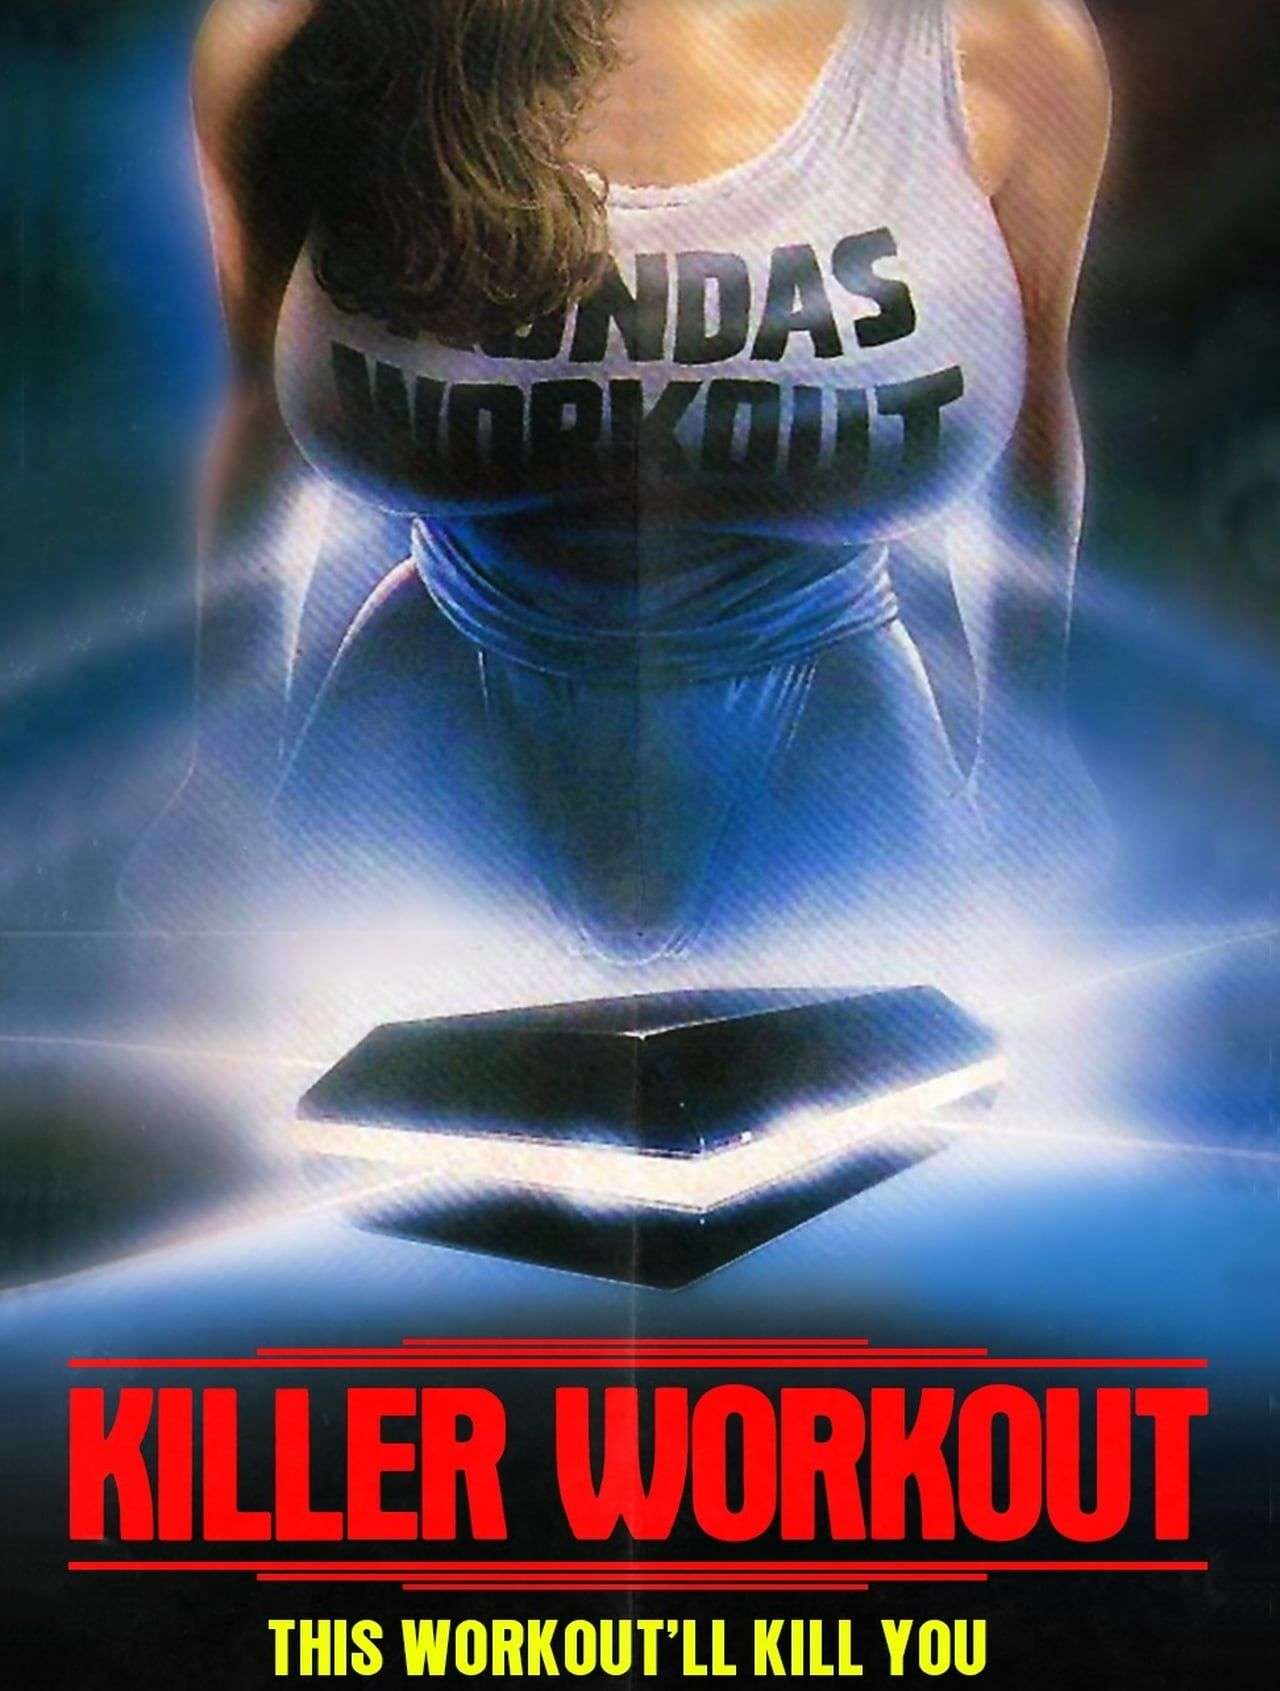 Killer Workout (1987)